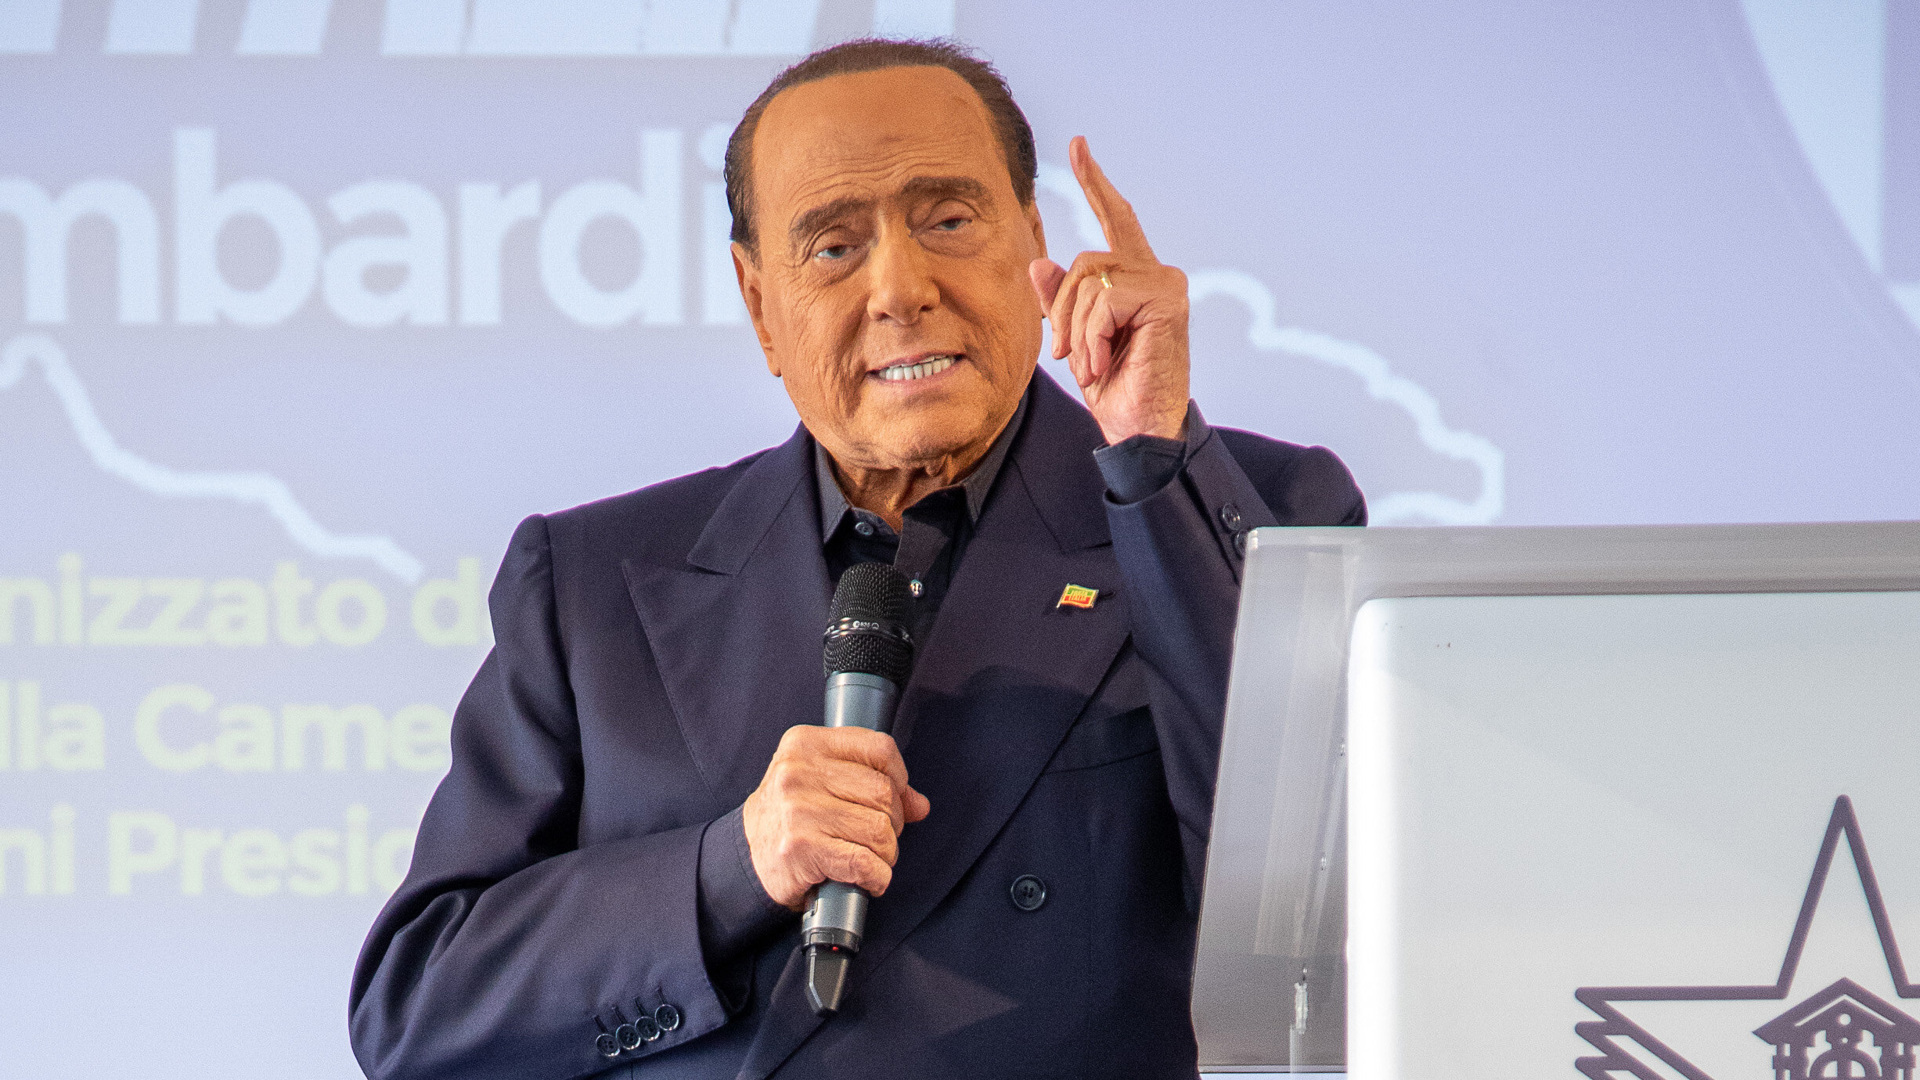 Чувство юмора и борьба до конца: каким запомнят Берлускони